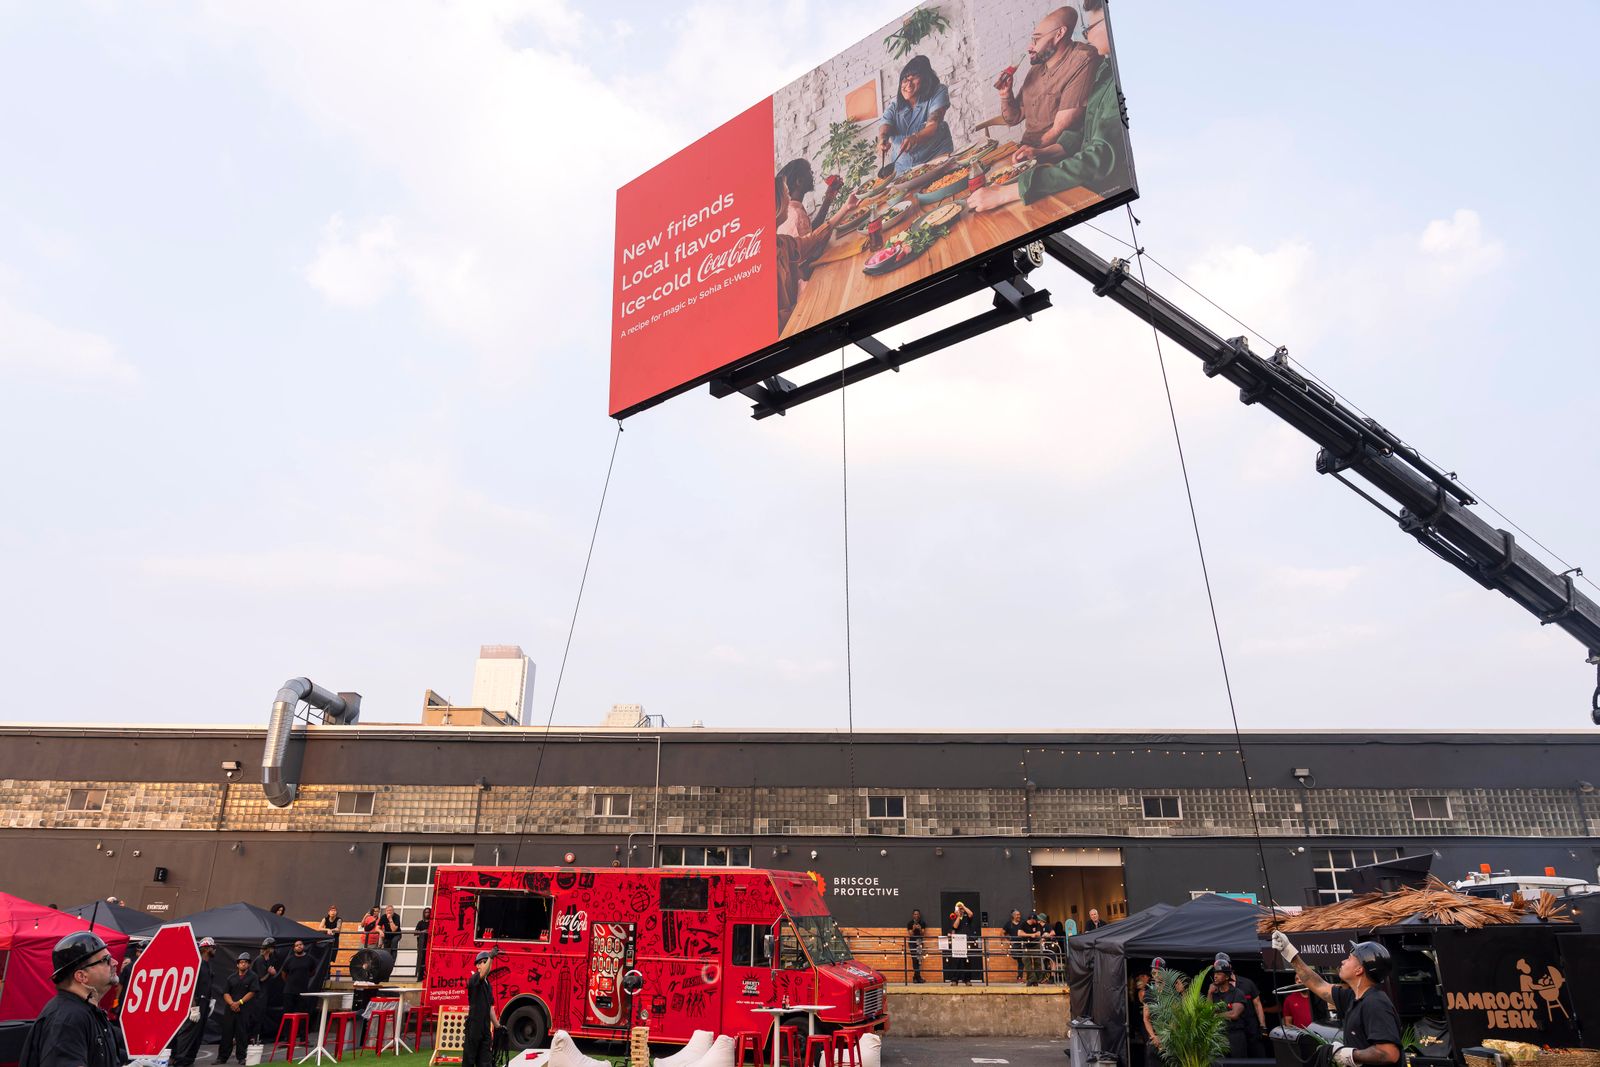 Coca-Cola's Billboard to Table event